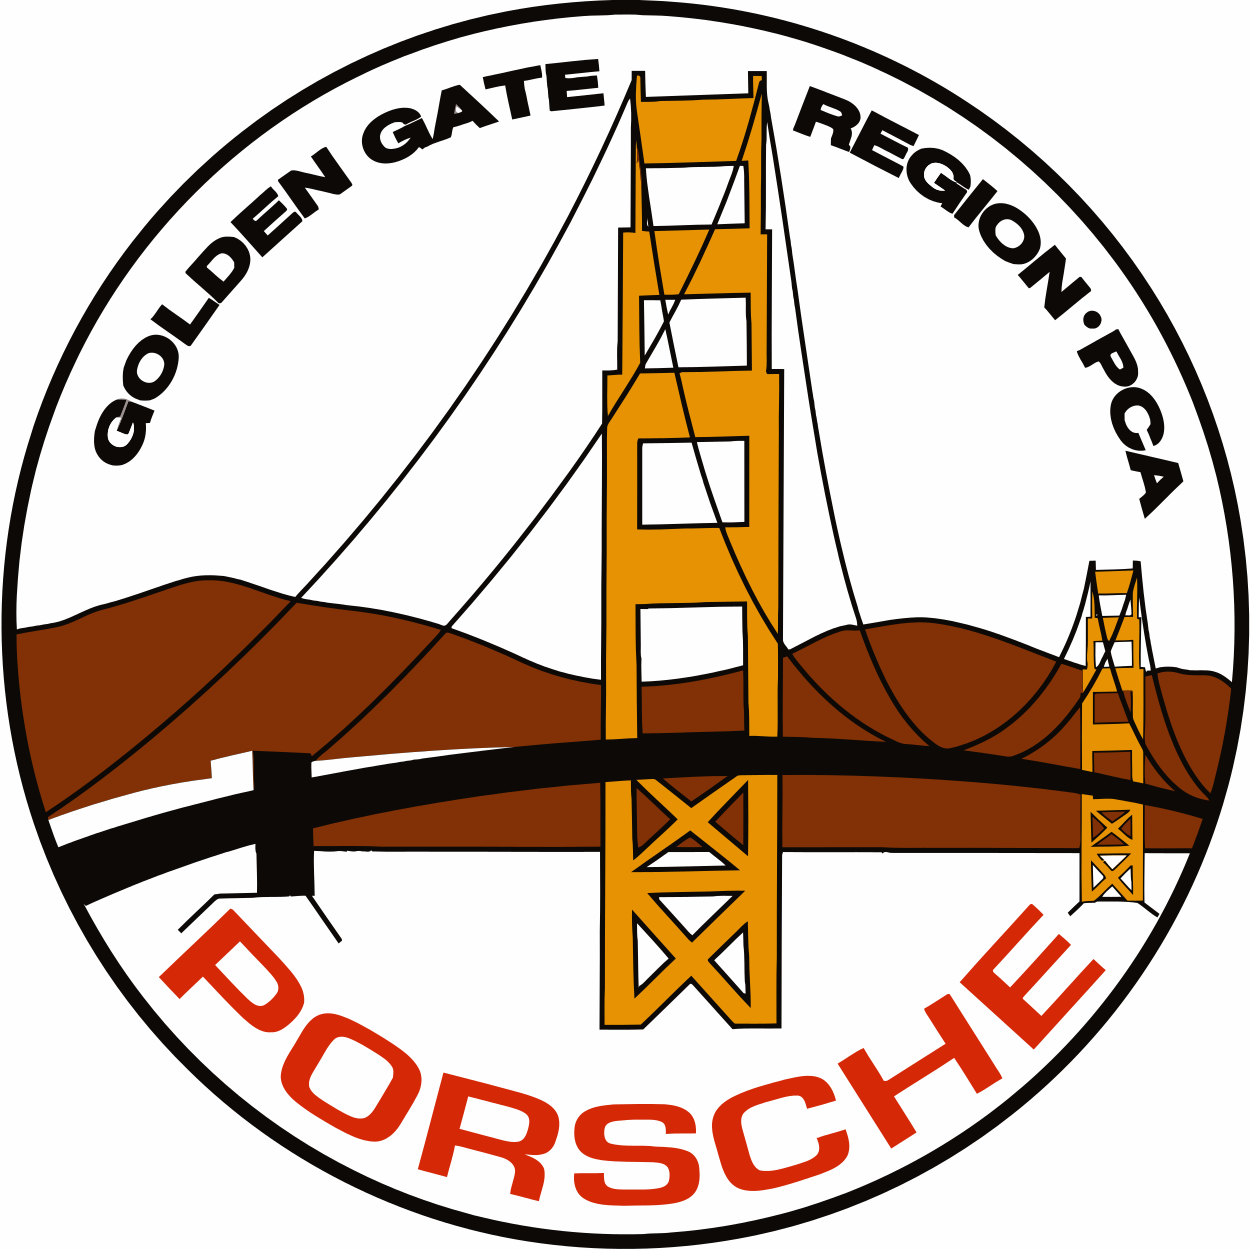 PCA Golden Gate Region